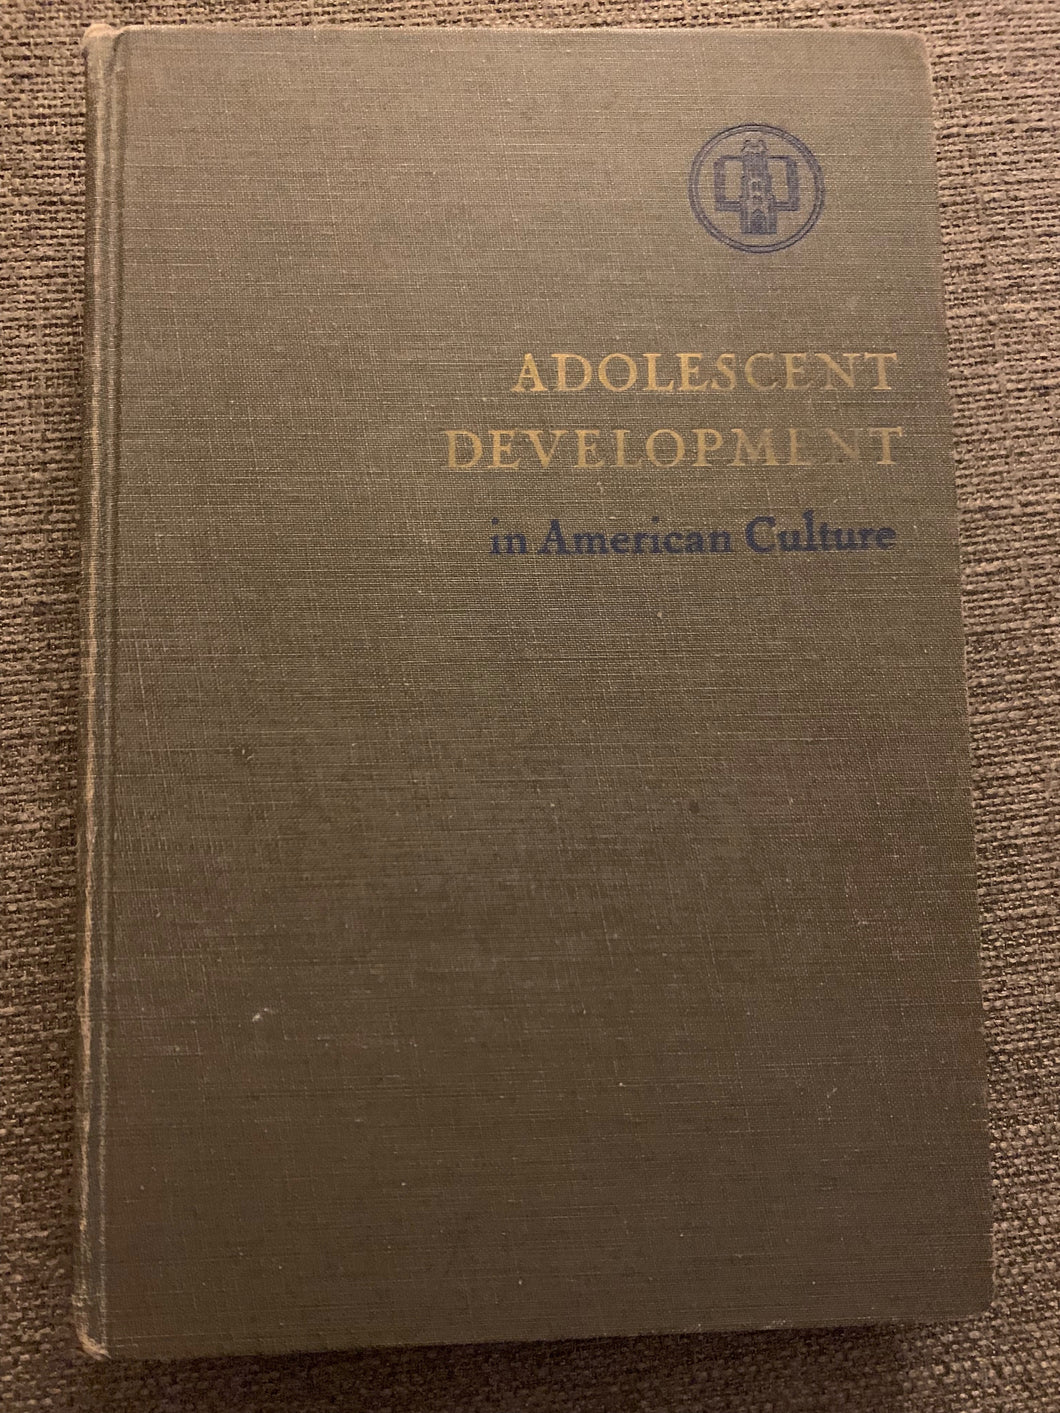 Adolescent Development in American Culture by Harold W. Bernard